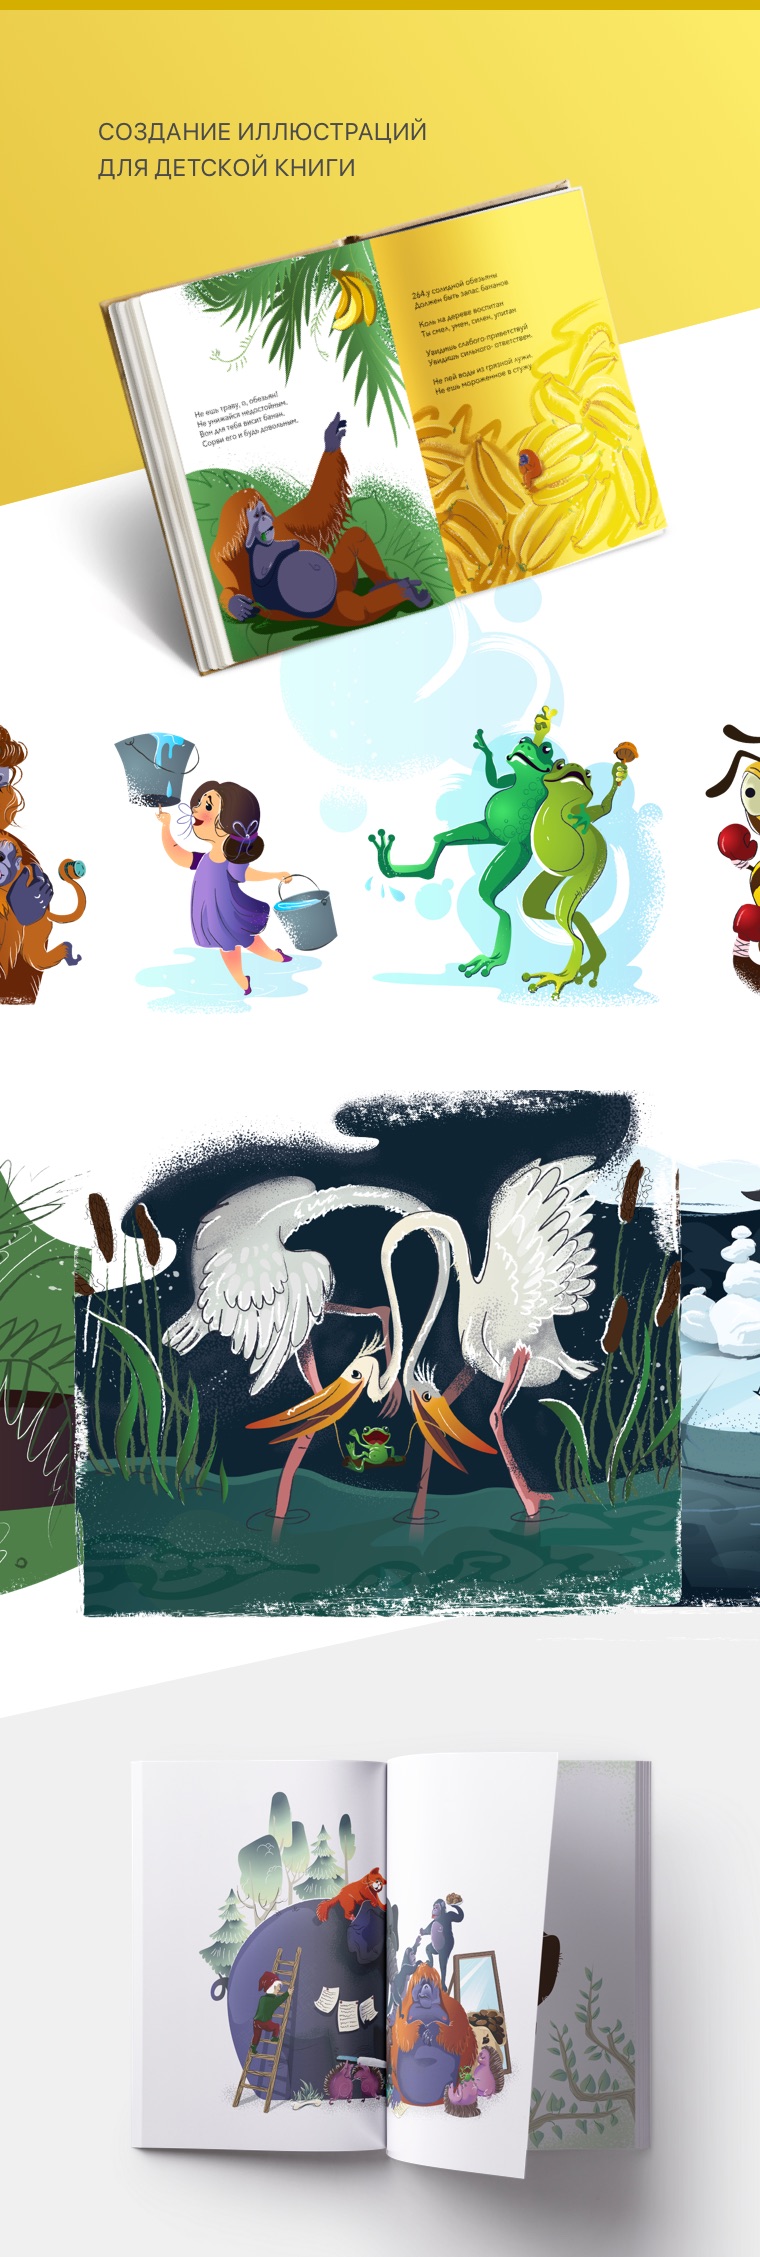 Эскиз проекта Illustrations for children's book